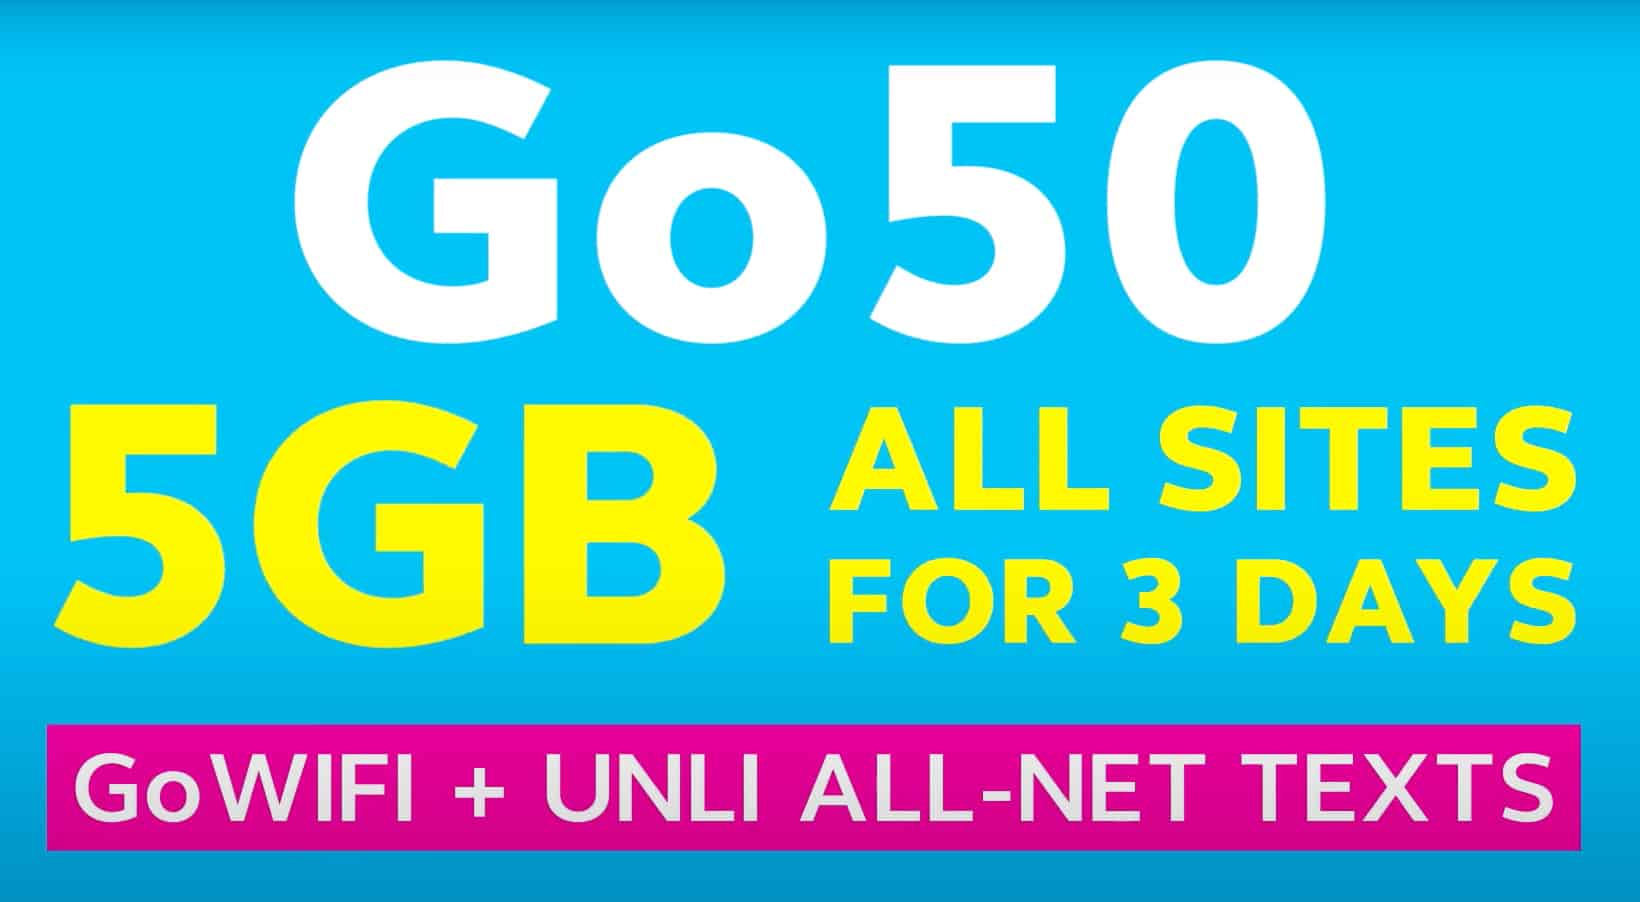 Globe Go50 new promo